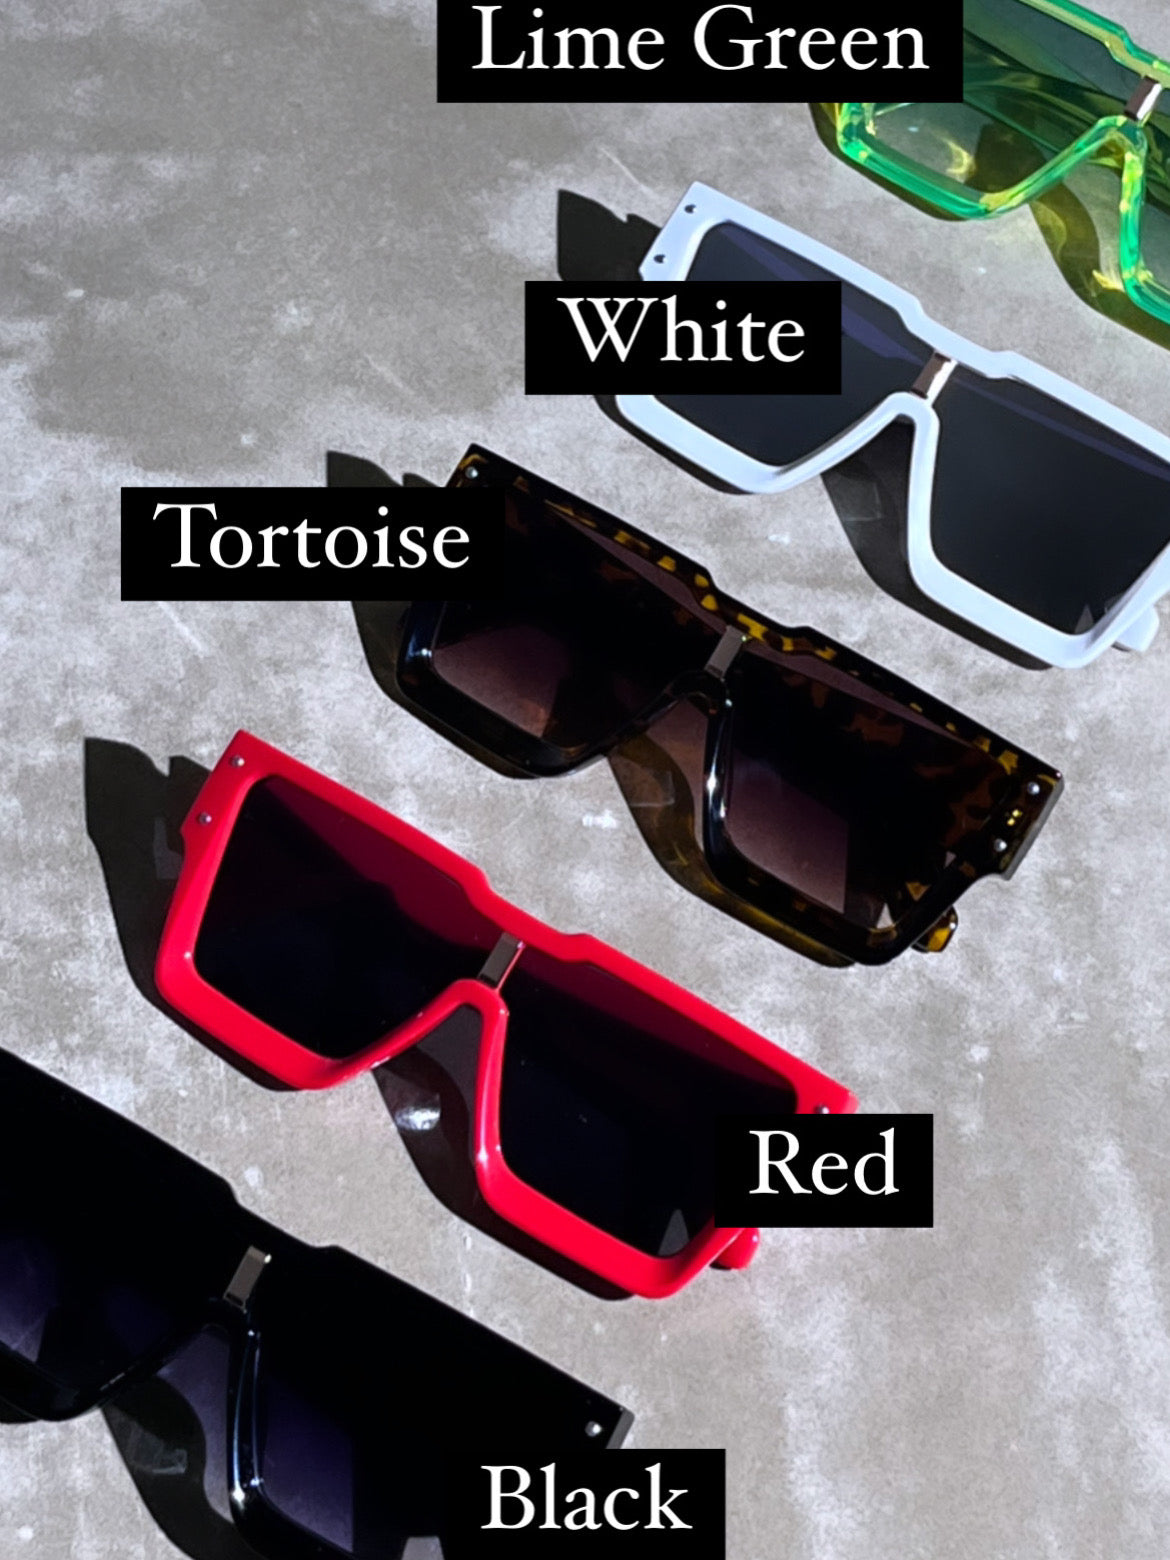 Replica Louis Vuitton Men's Sunglasses Collection